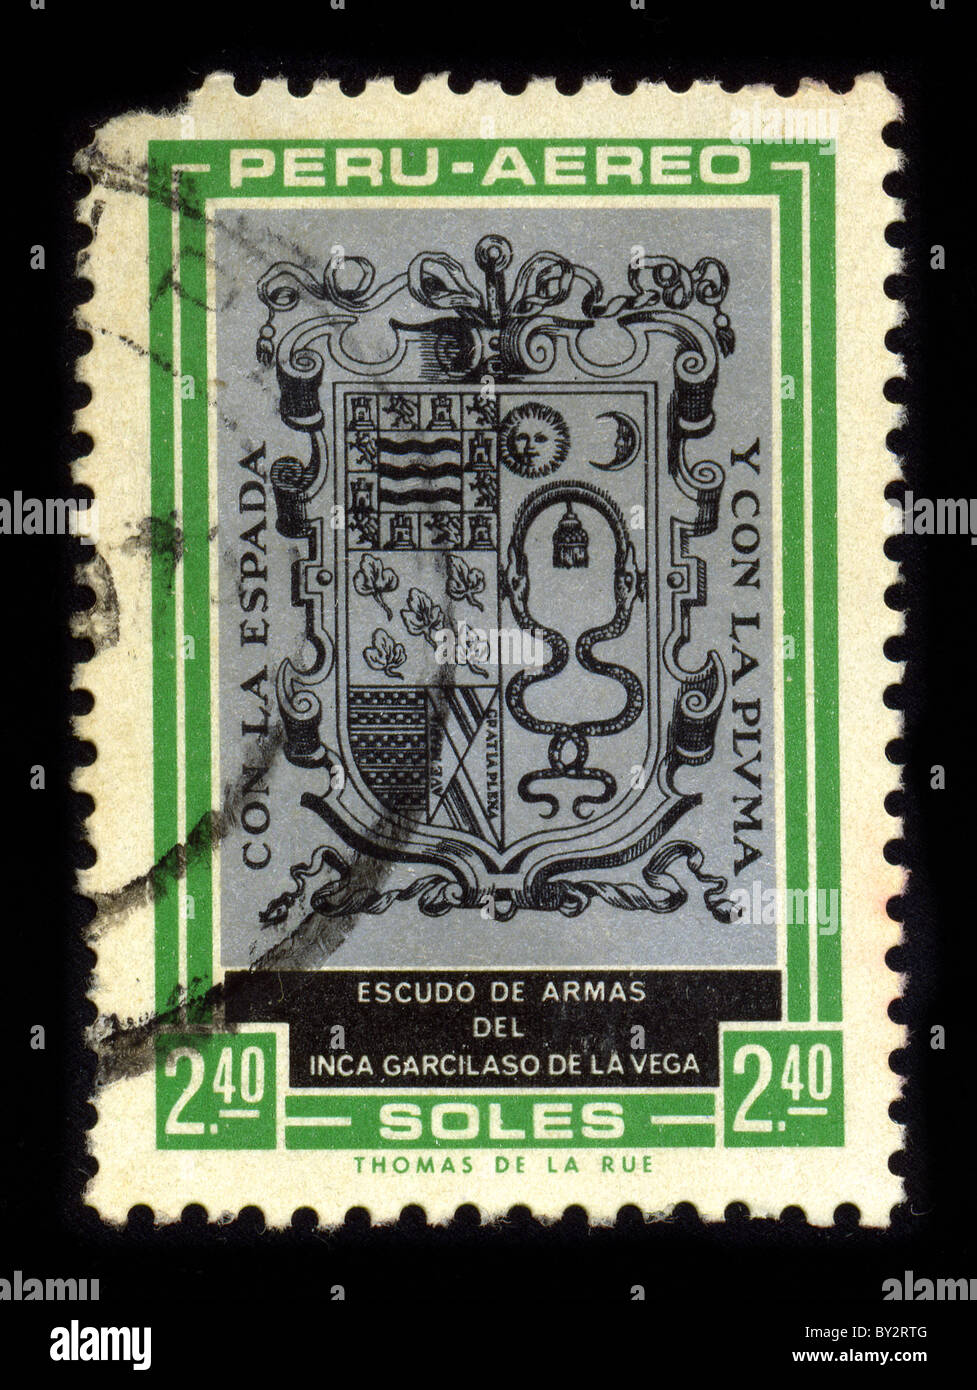 Postage stamp. Stock Photo